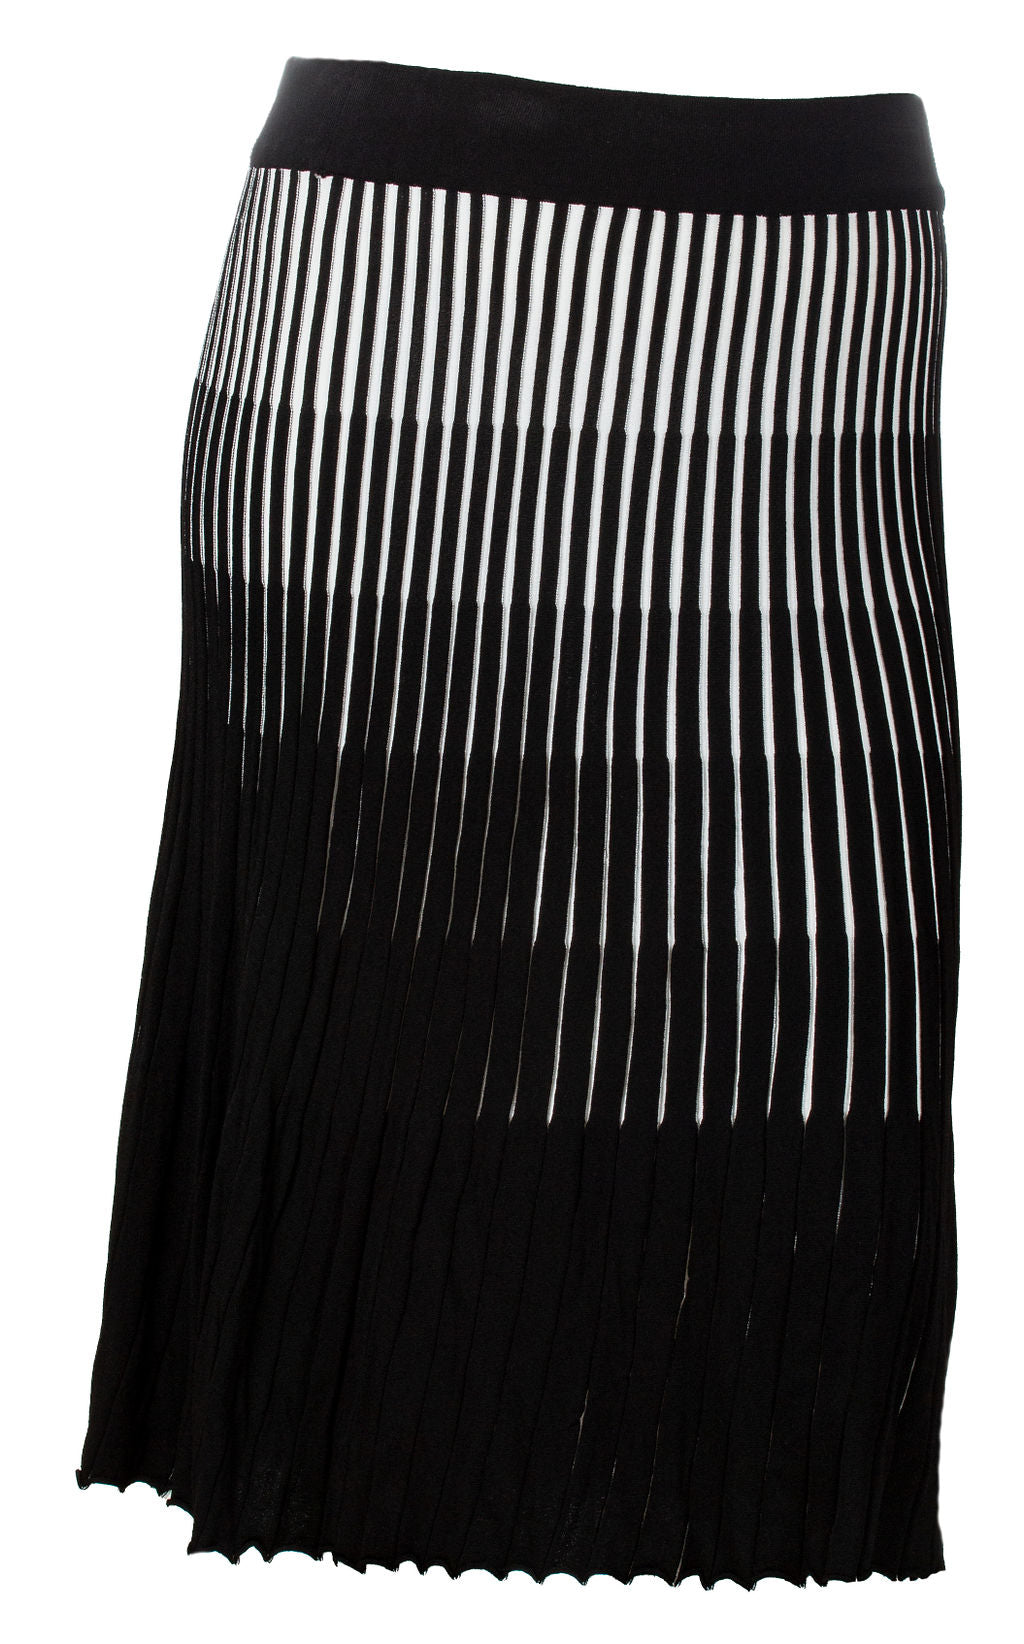 black & white piano style skirt